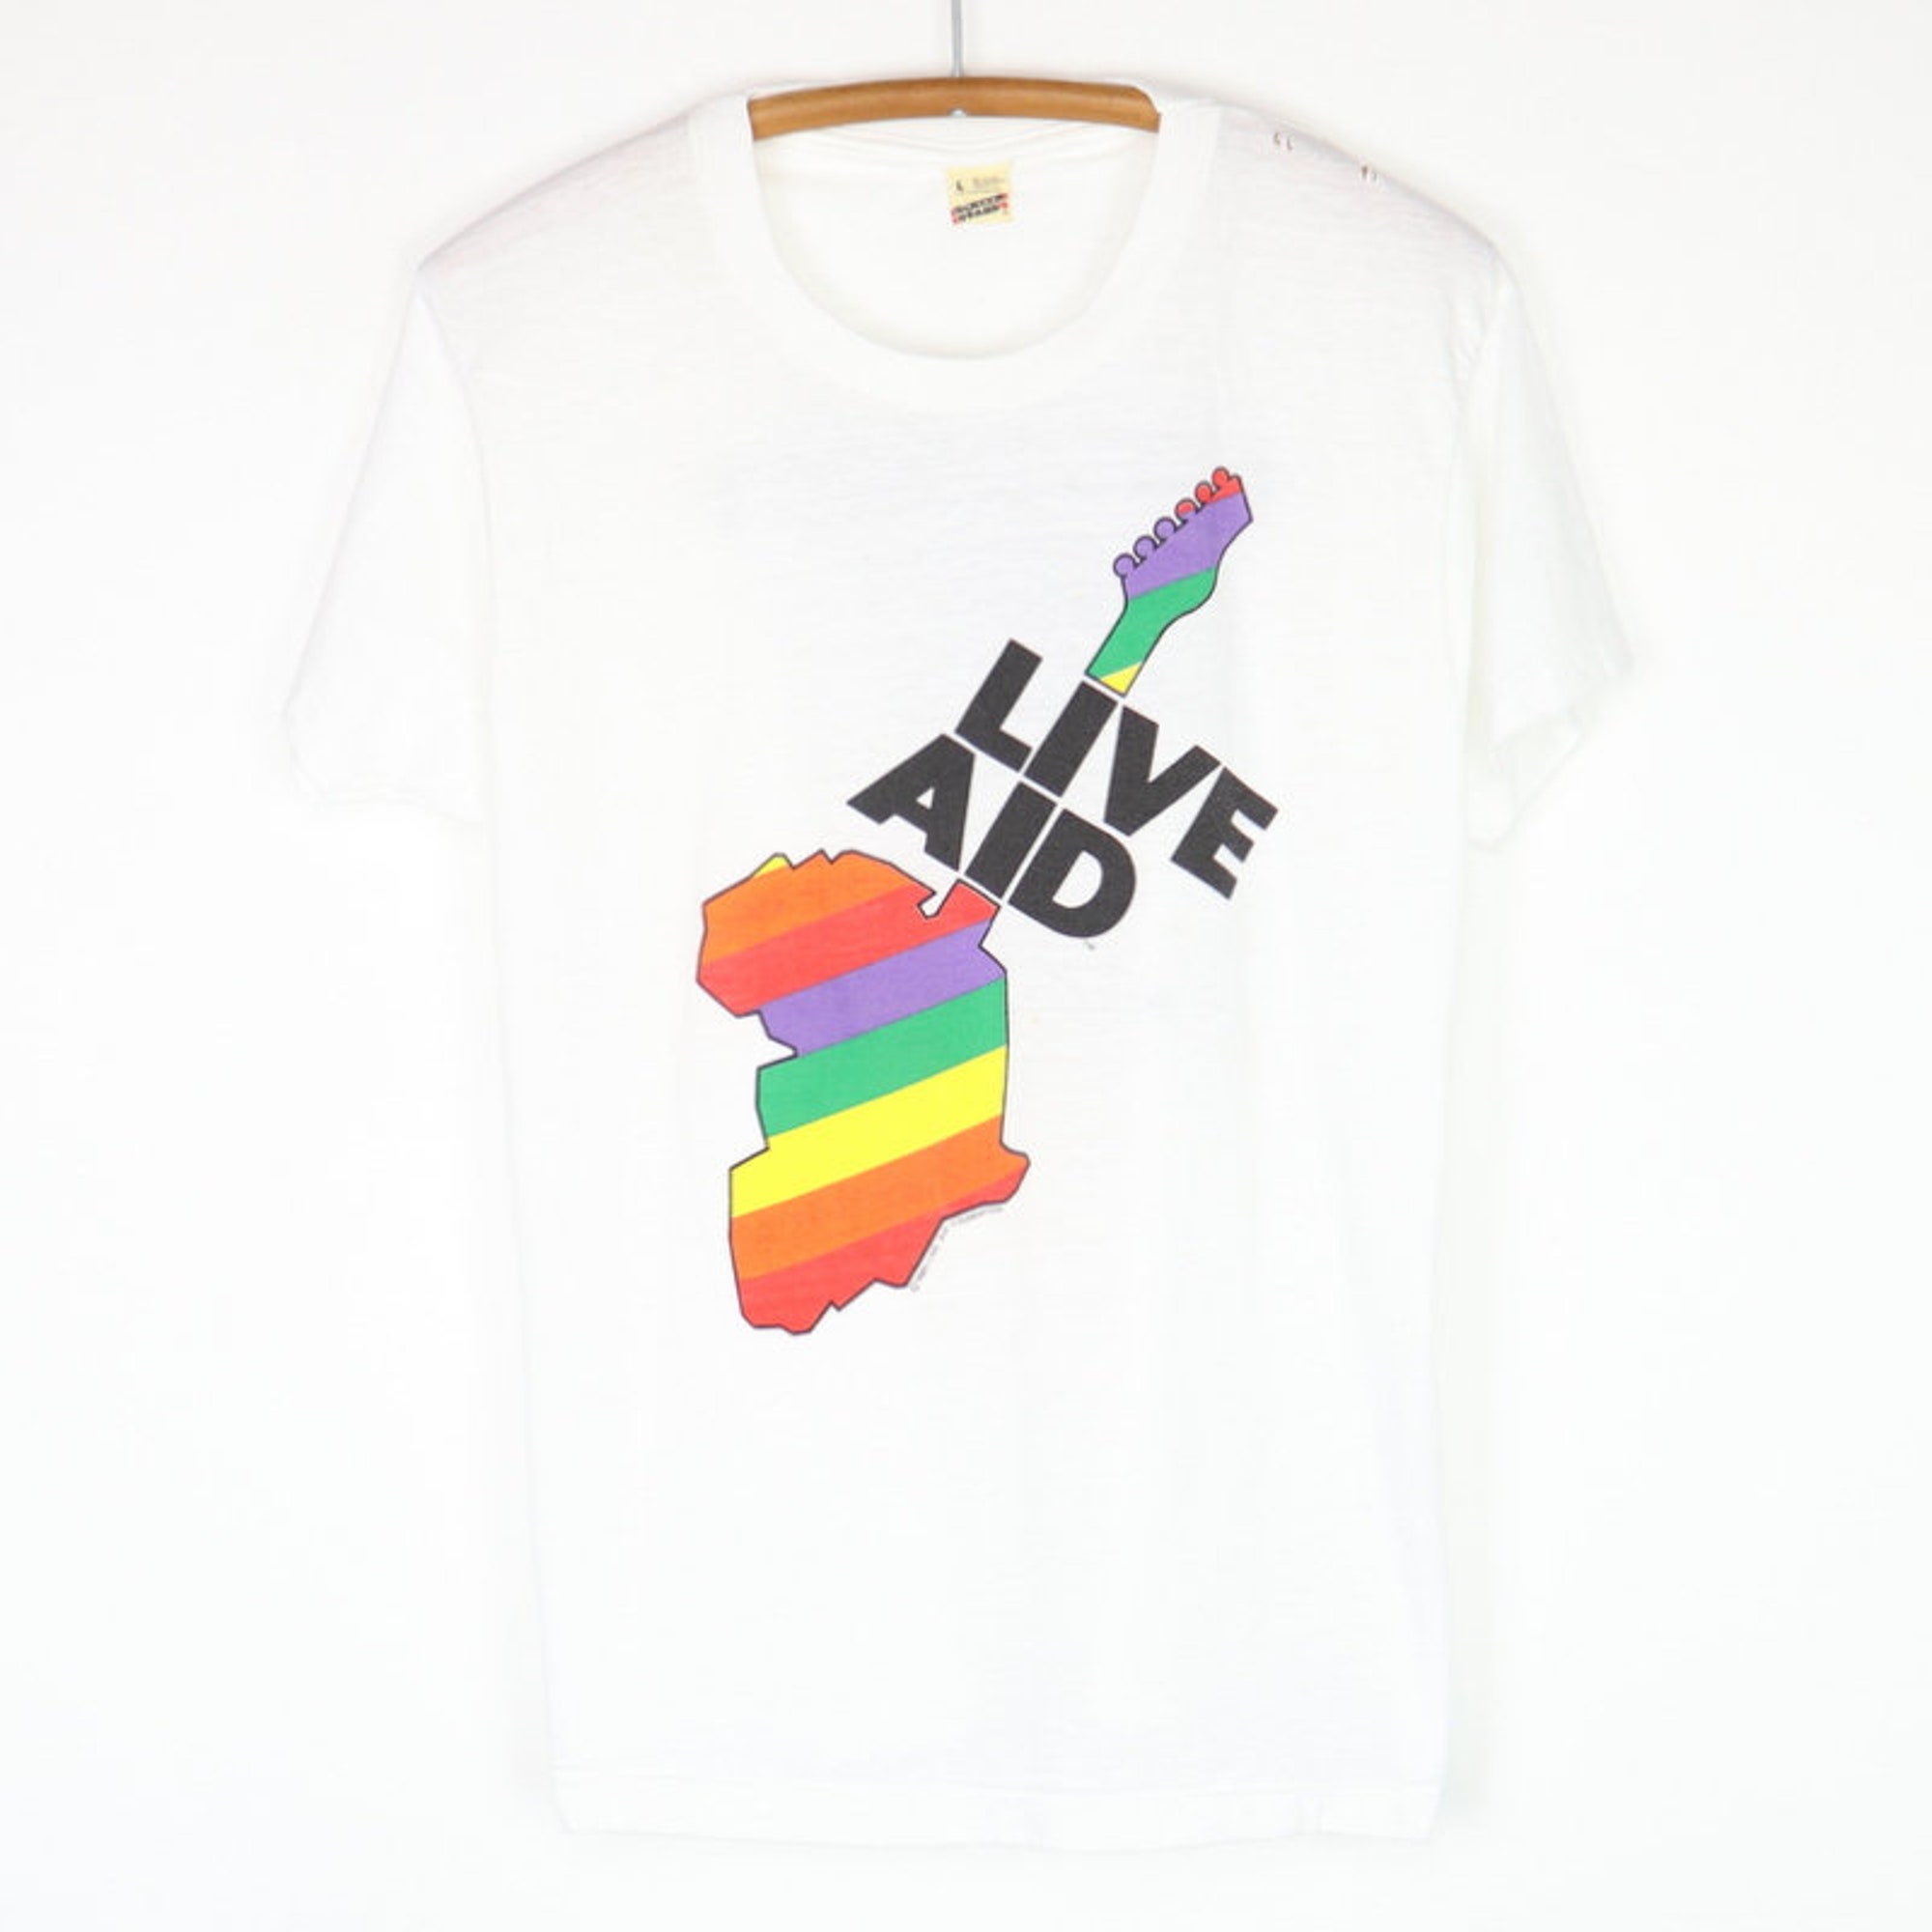 vintage 1985 Live Aid This Shirt Saves Lives Concert Shirt